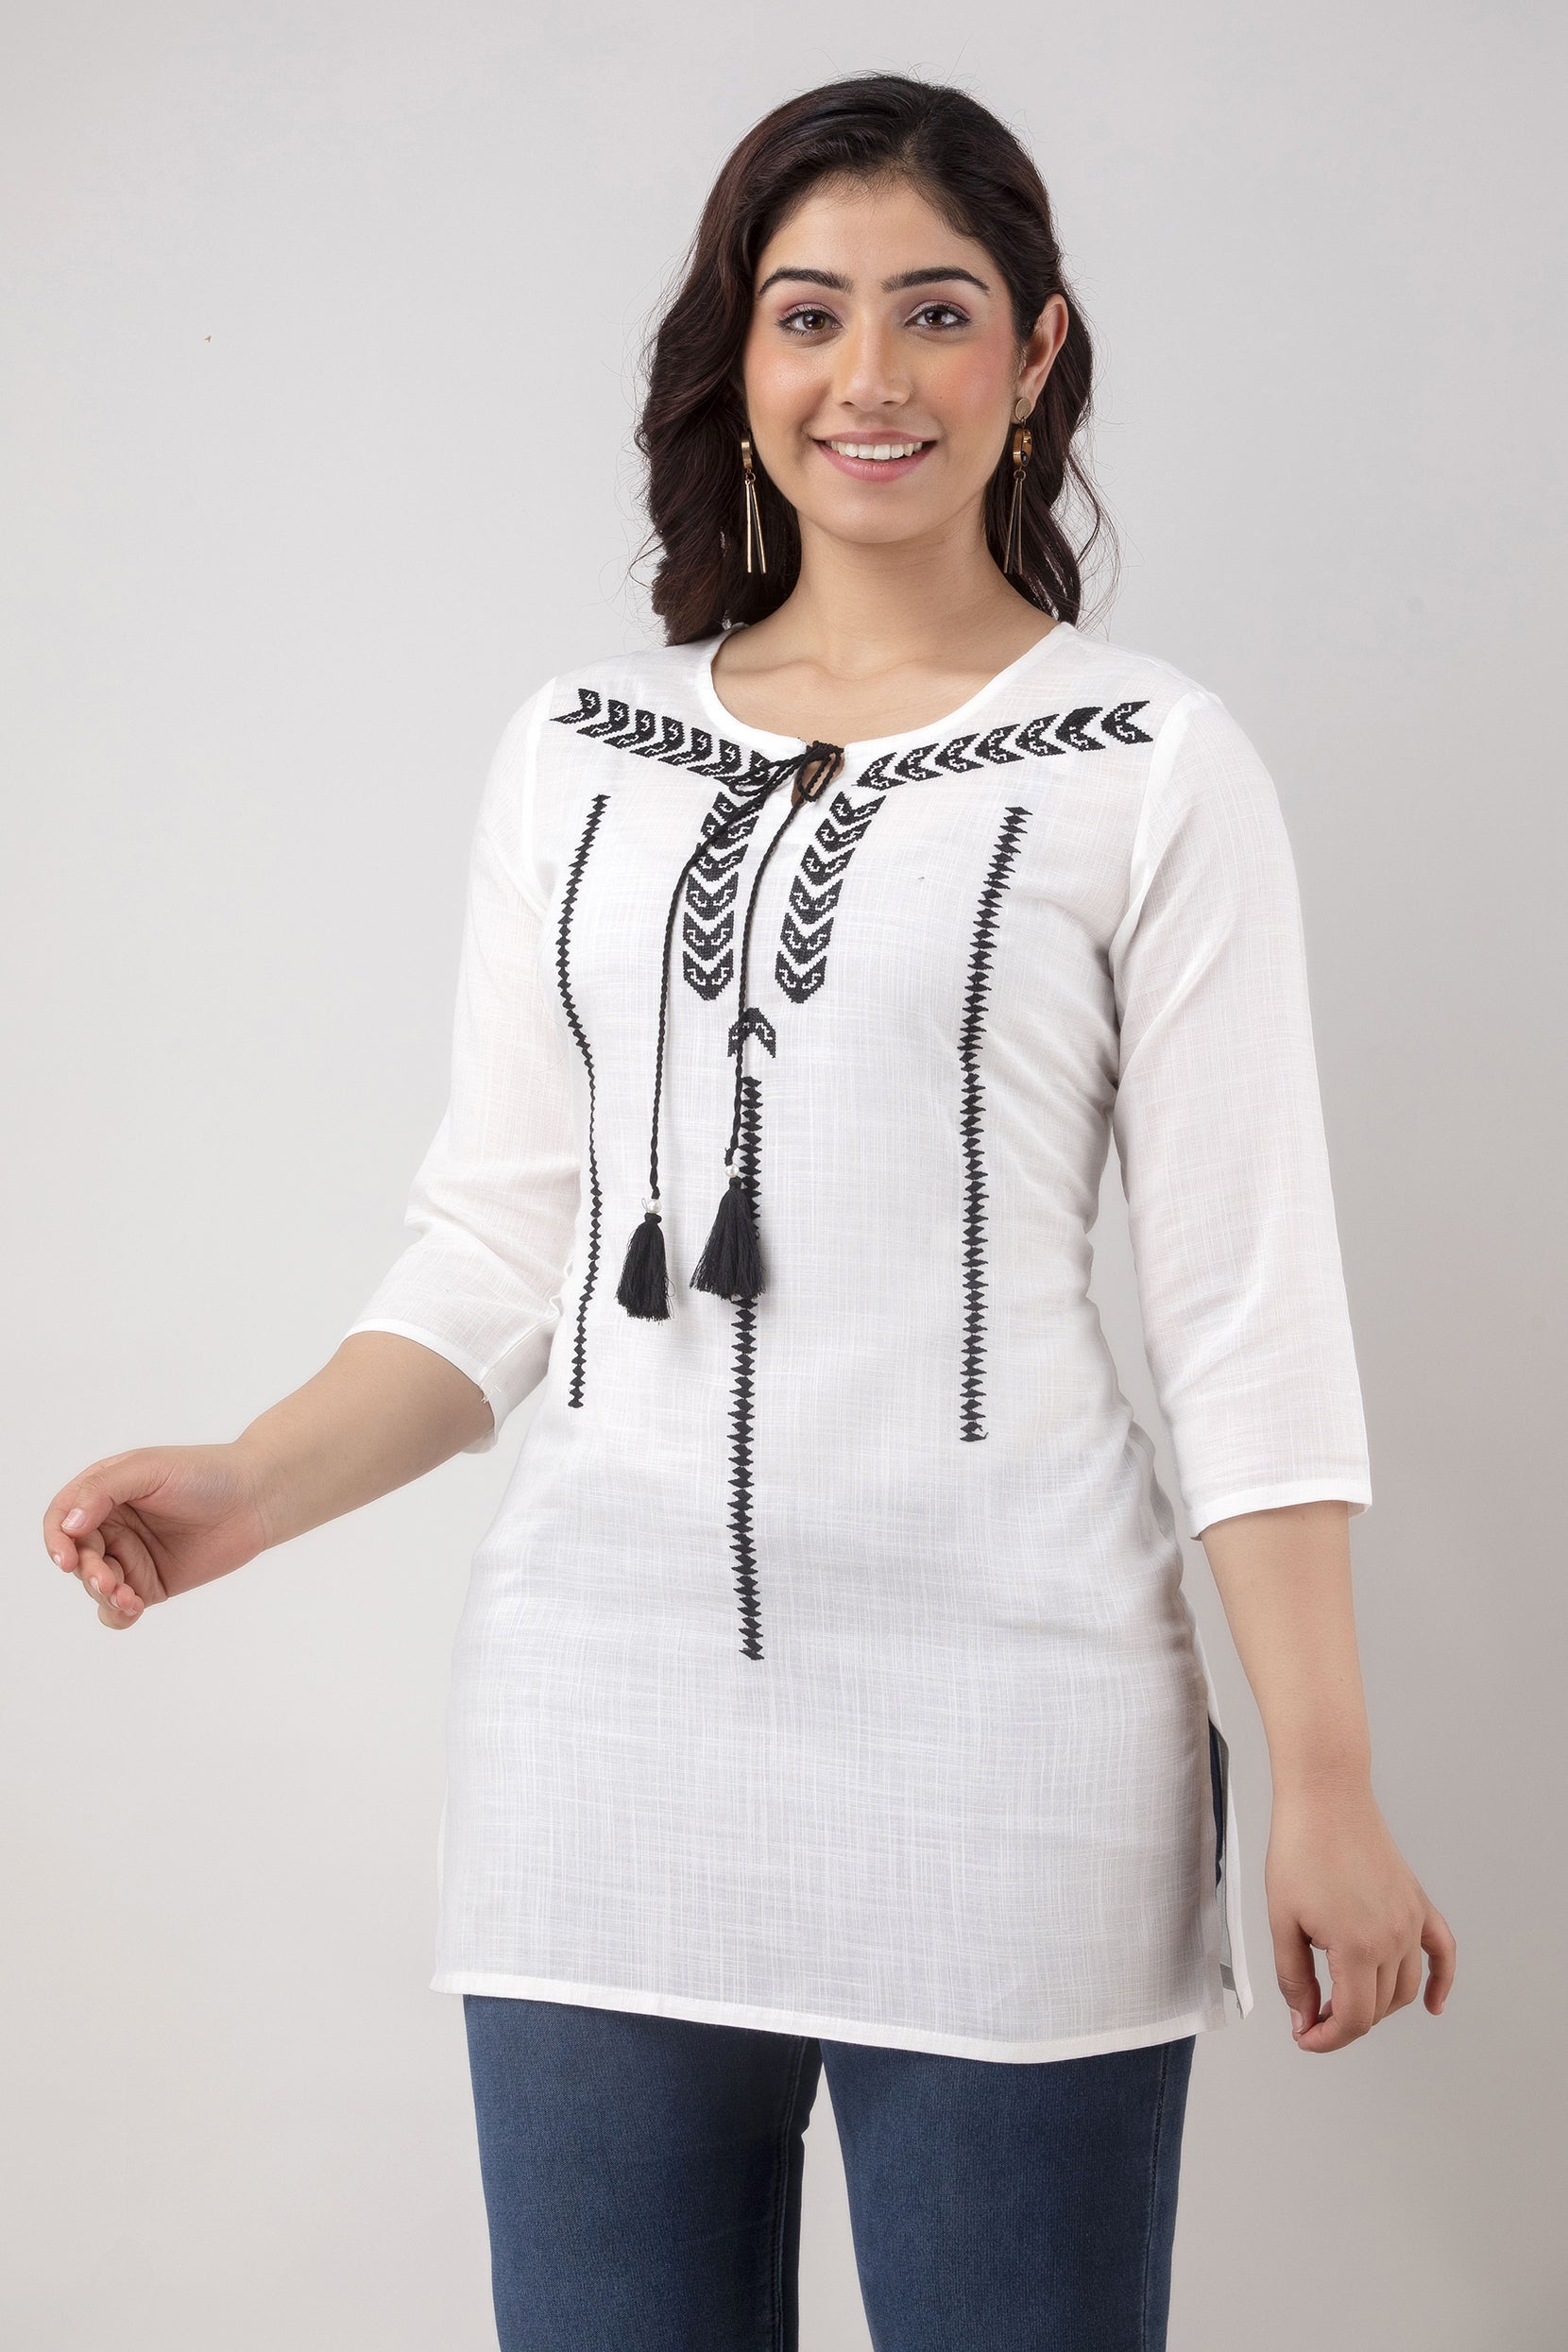 Women's Embroidered Viscose Rayon Regular Top (White) - Charu USA